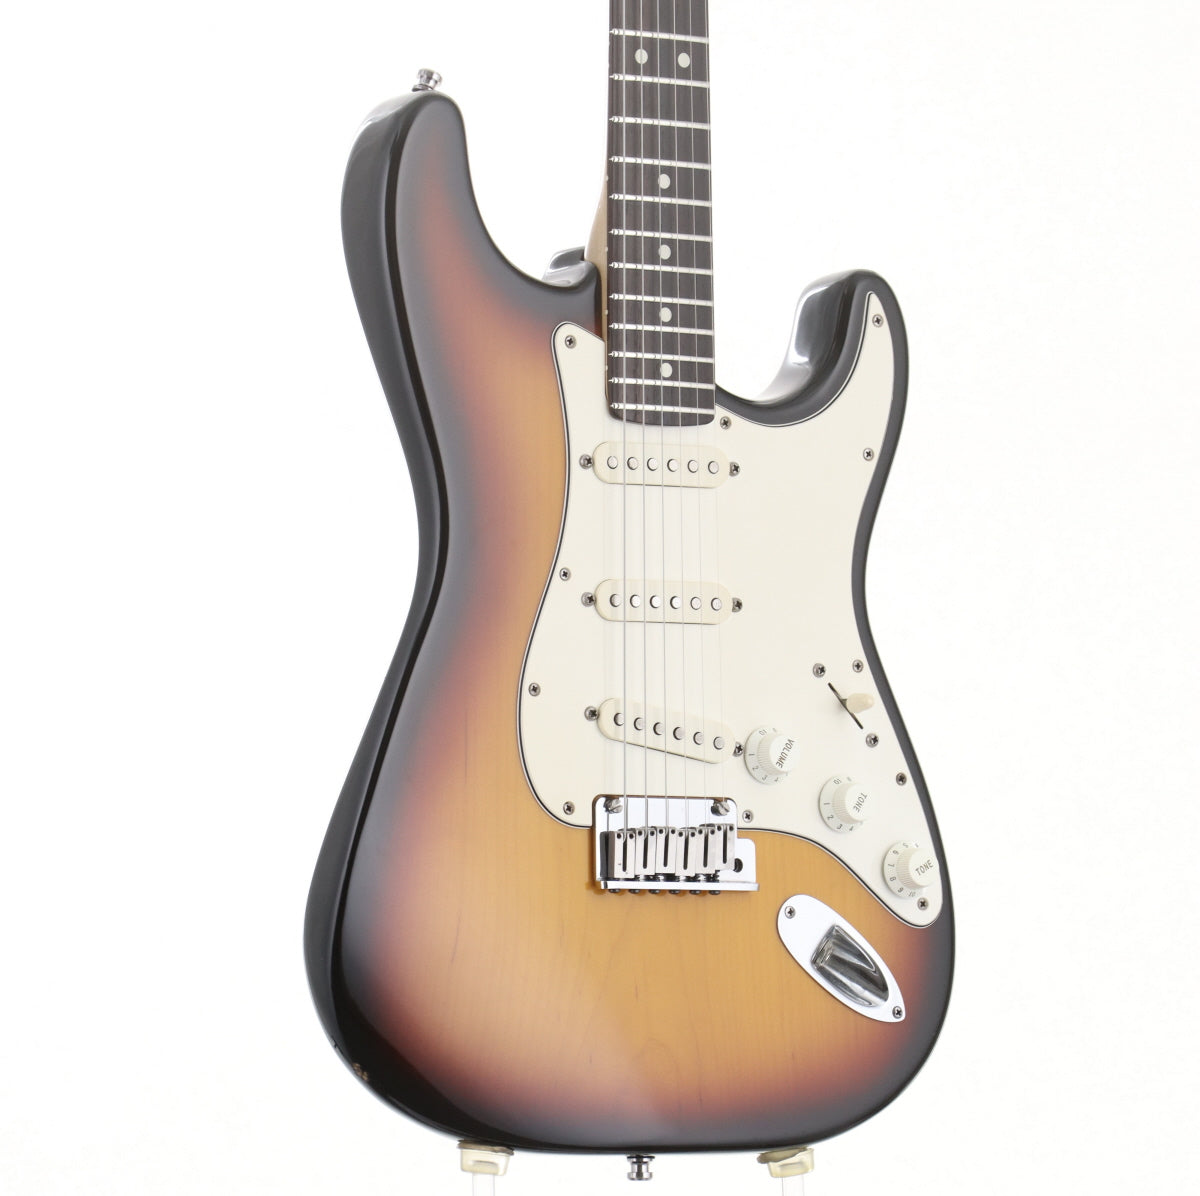 [SN N3146493] USED Fender / American Standard Stratocaster Brown Sunburst Rosewood Fingerboard 1993 [09]